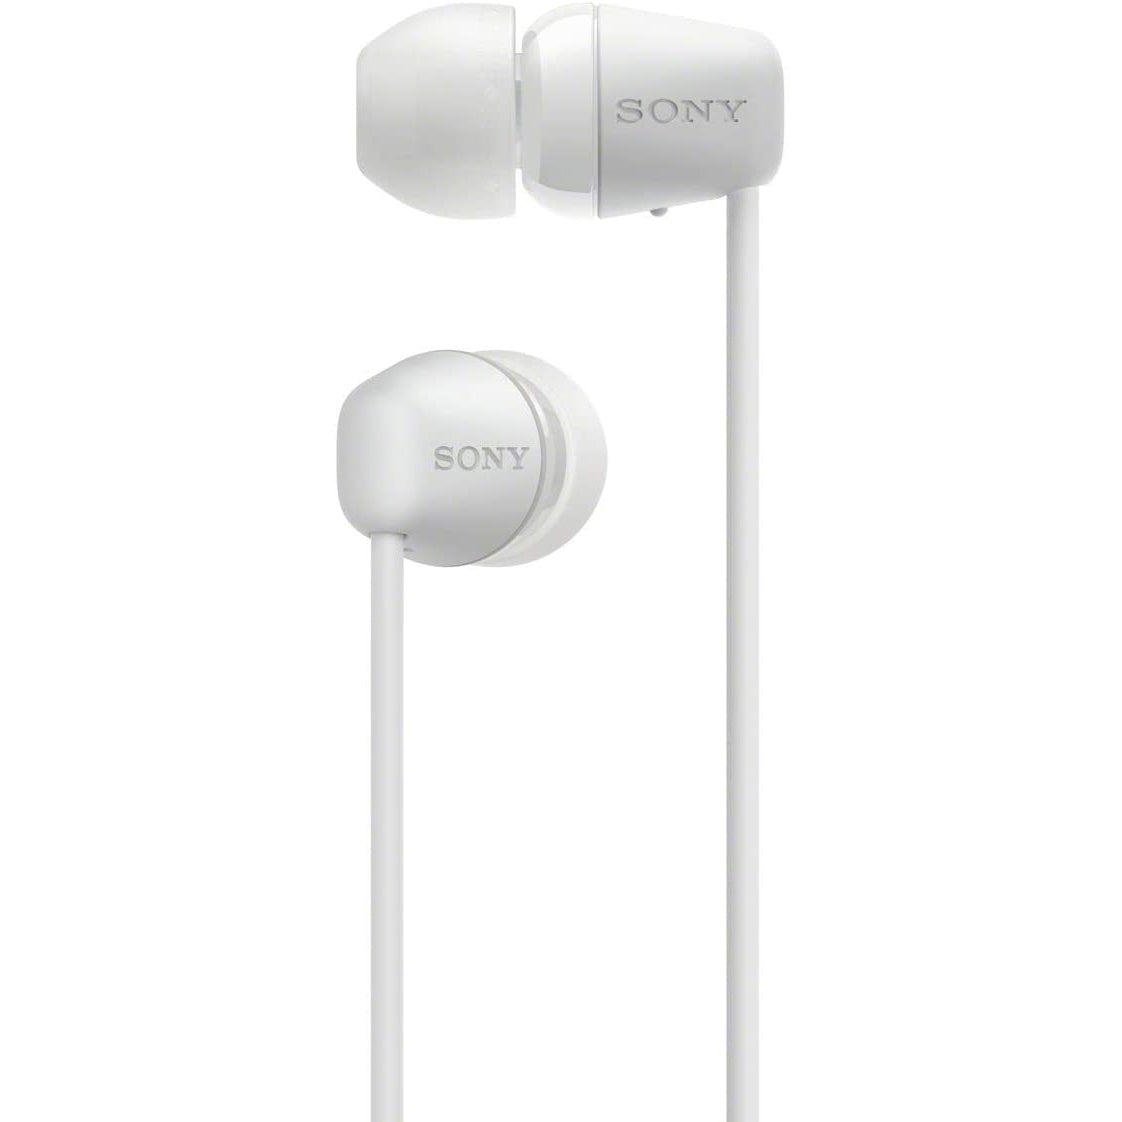 Sony WI-C200 Wireless Bluetooth Headphones with Mic - White - Good